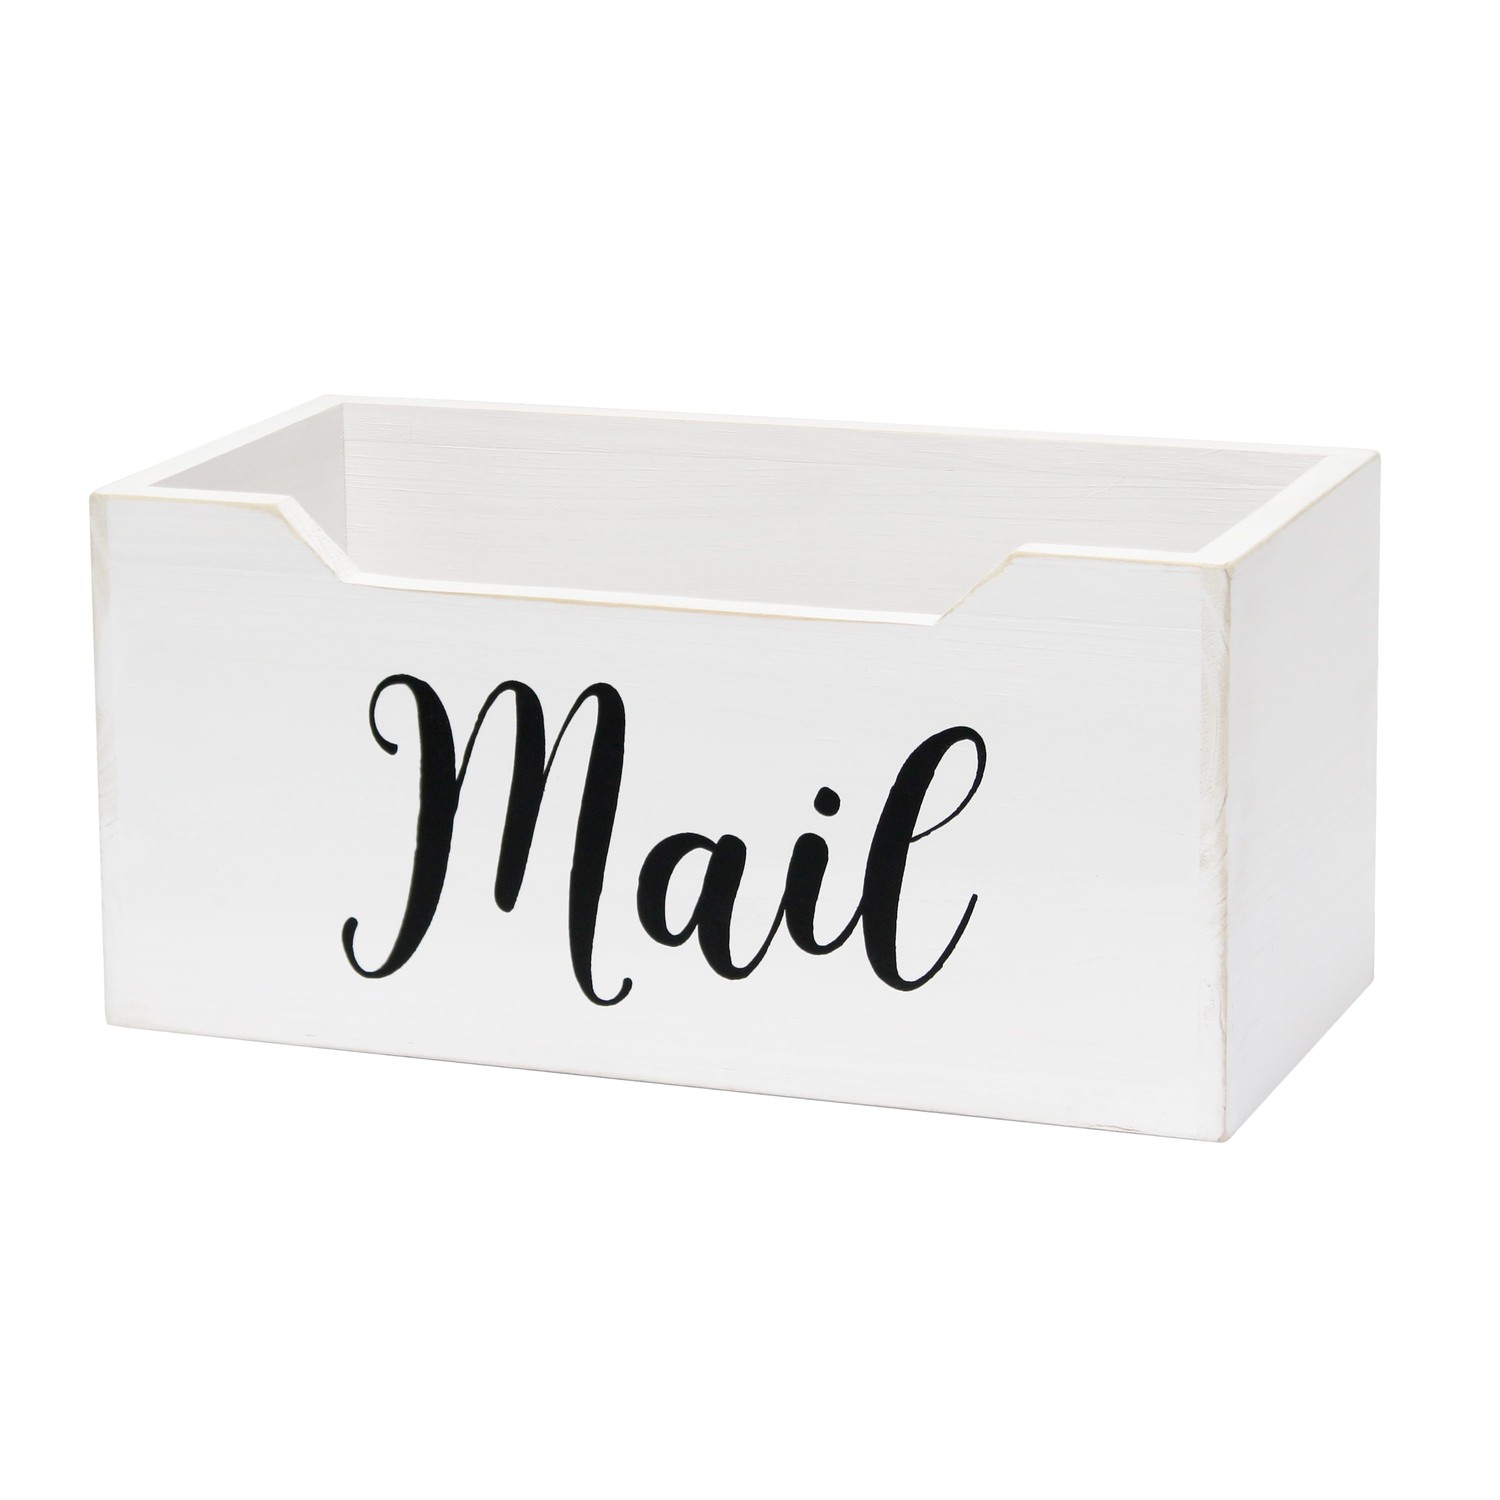 Elegant Designs Rustic Farmhouse Wooden Tabletop Decorative Script Word "Mail" Organizer Box, Letter Holder, White Wash